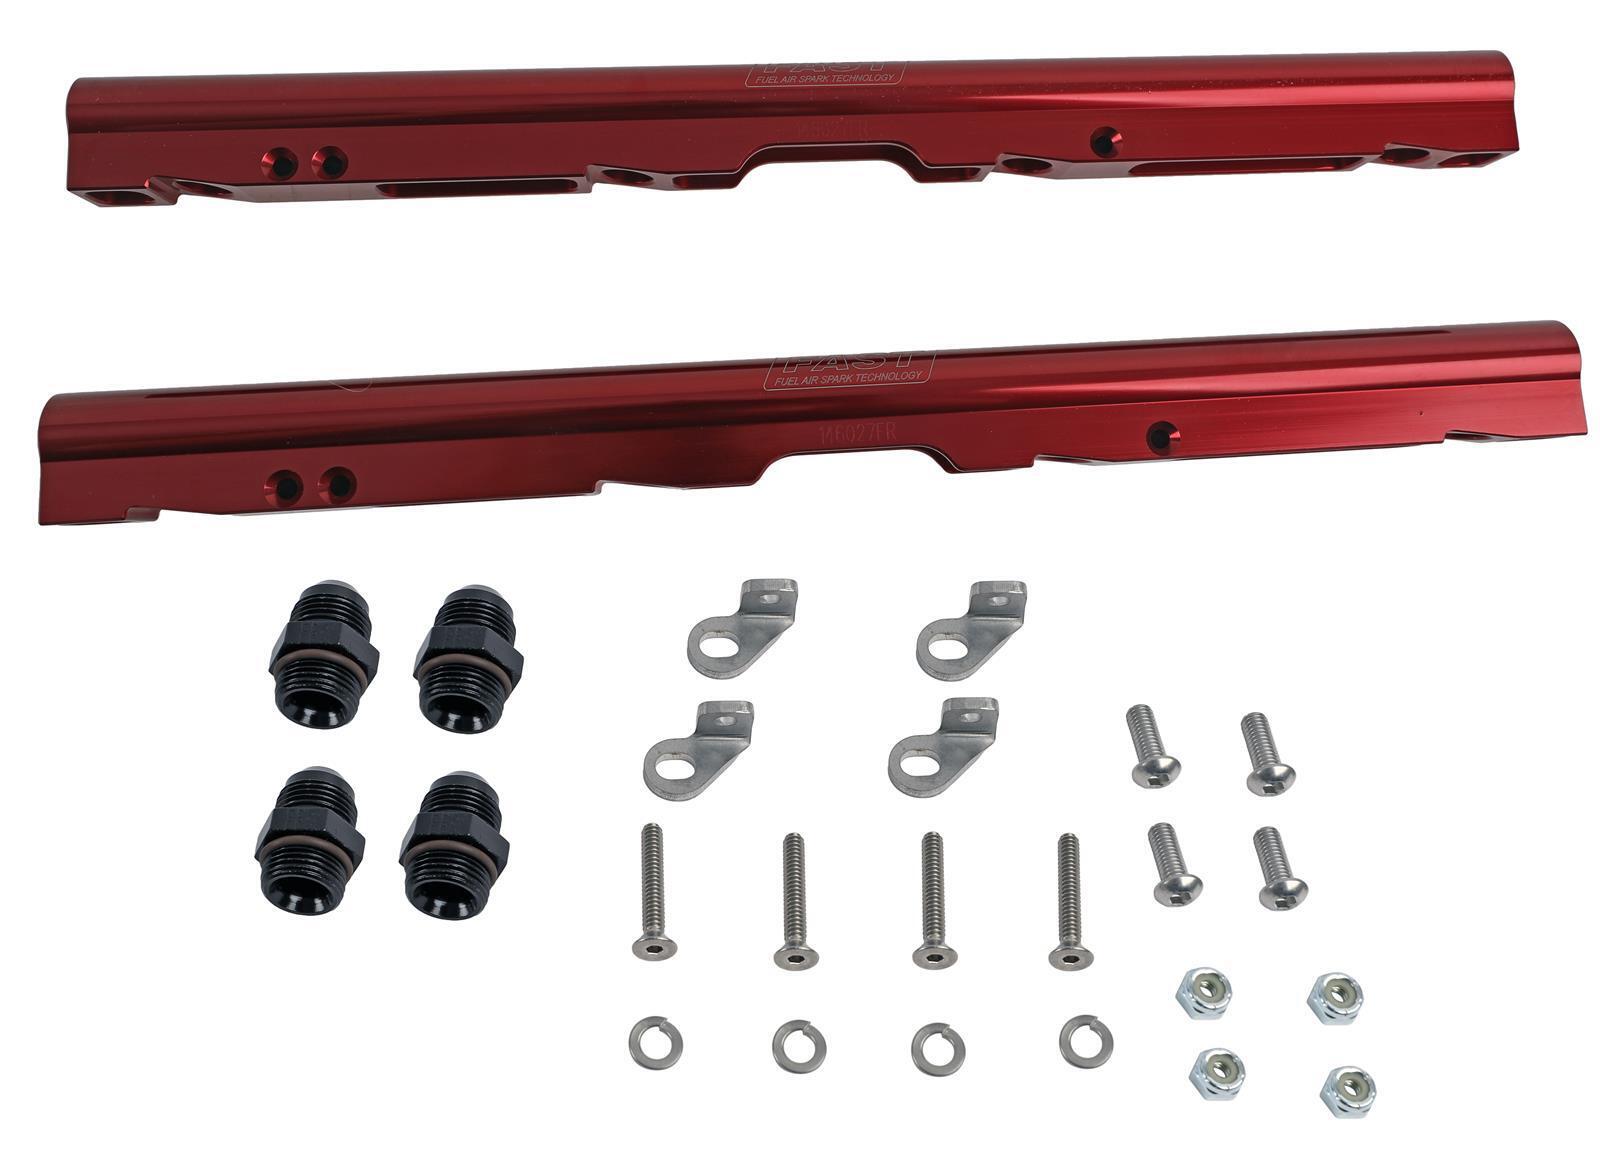 FAST Fuel Rails Billet Aluminum Red Chevy LS2 Engine LSXR 102mm Intake Kit